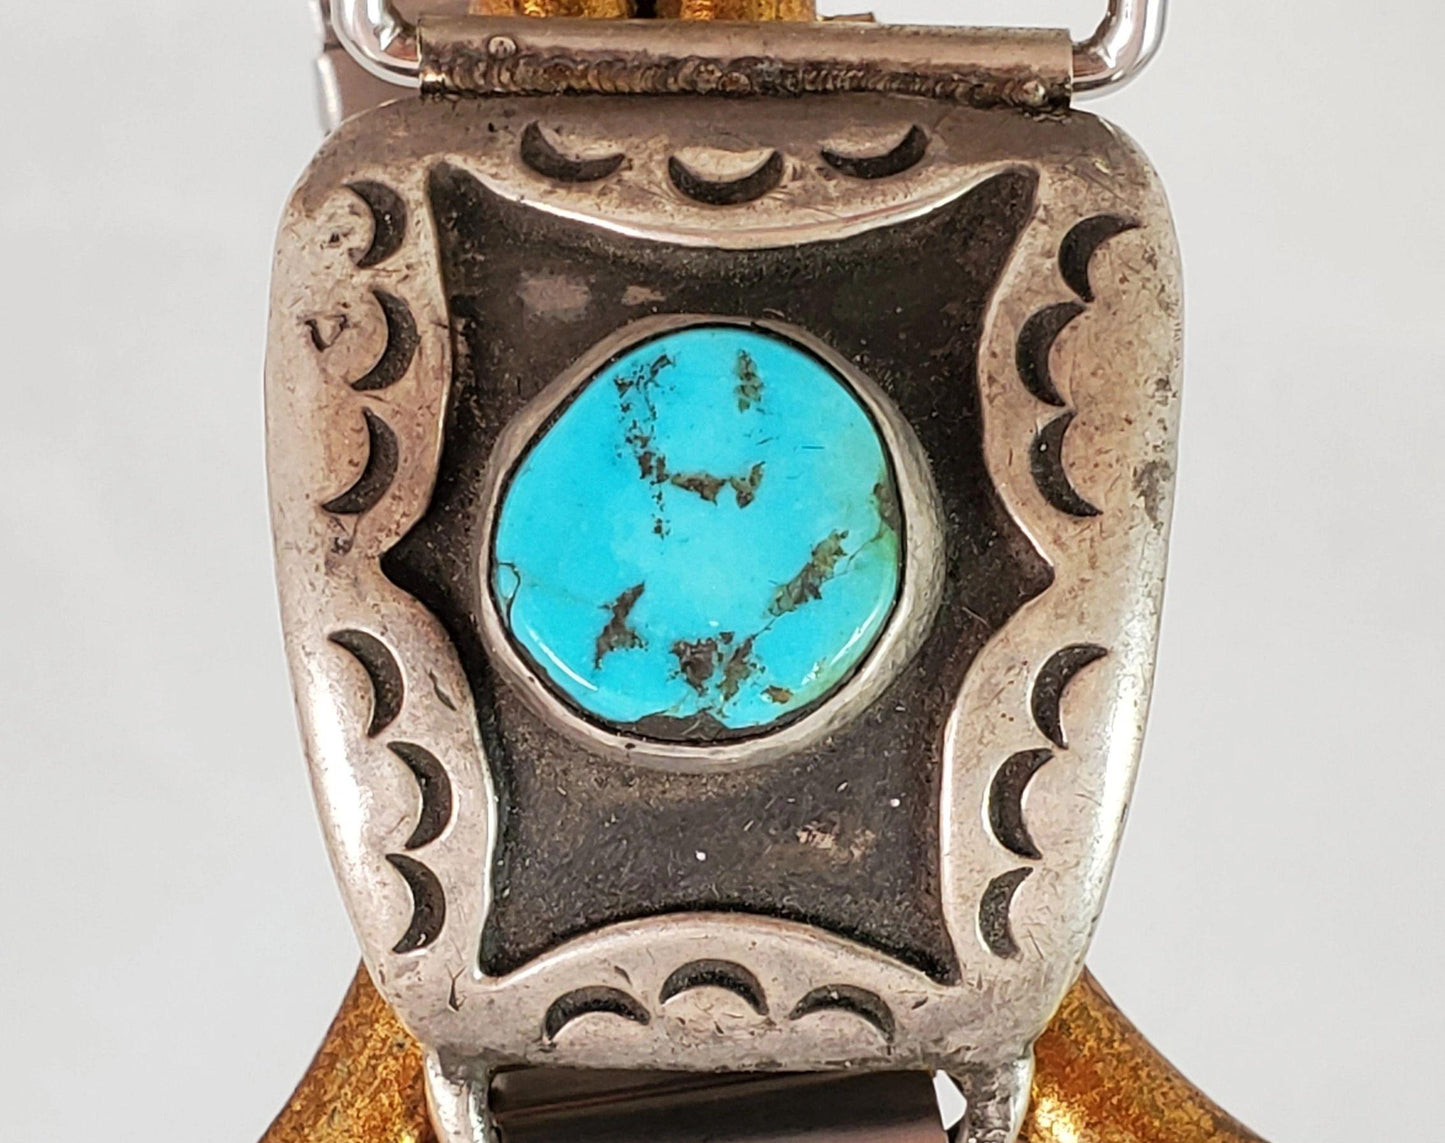 Vintage watch tips turquoise - Albuquerque Pawn Shop